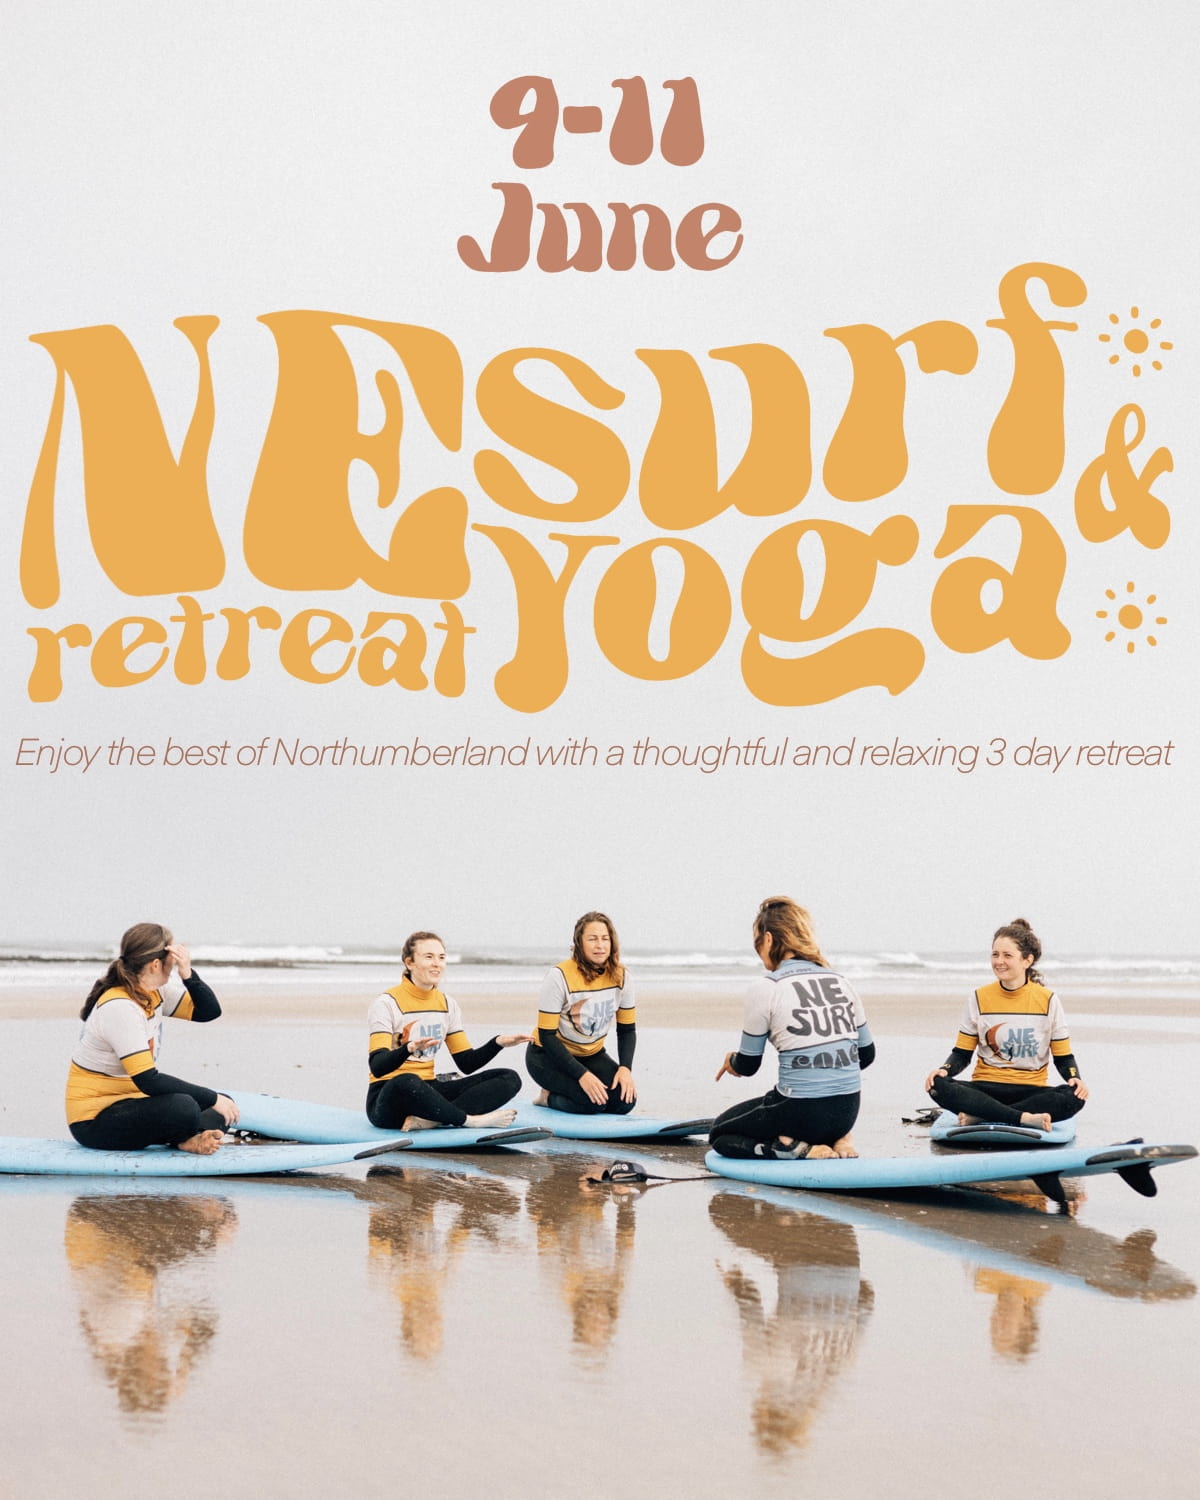 NE surf and yoga retreat